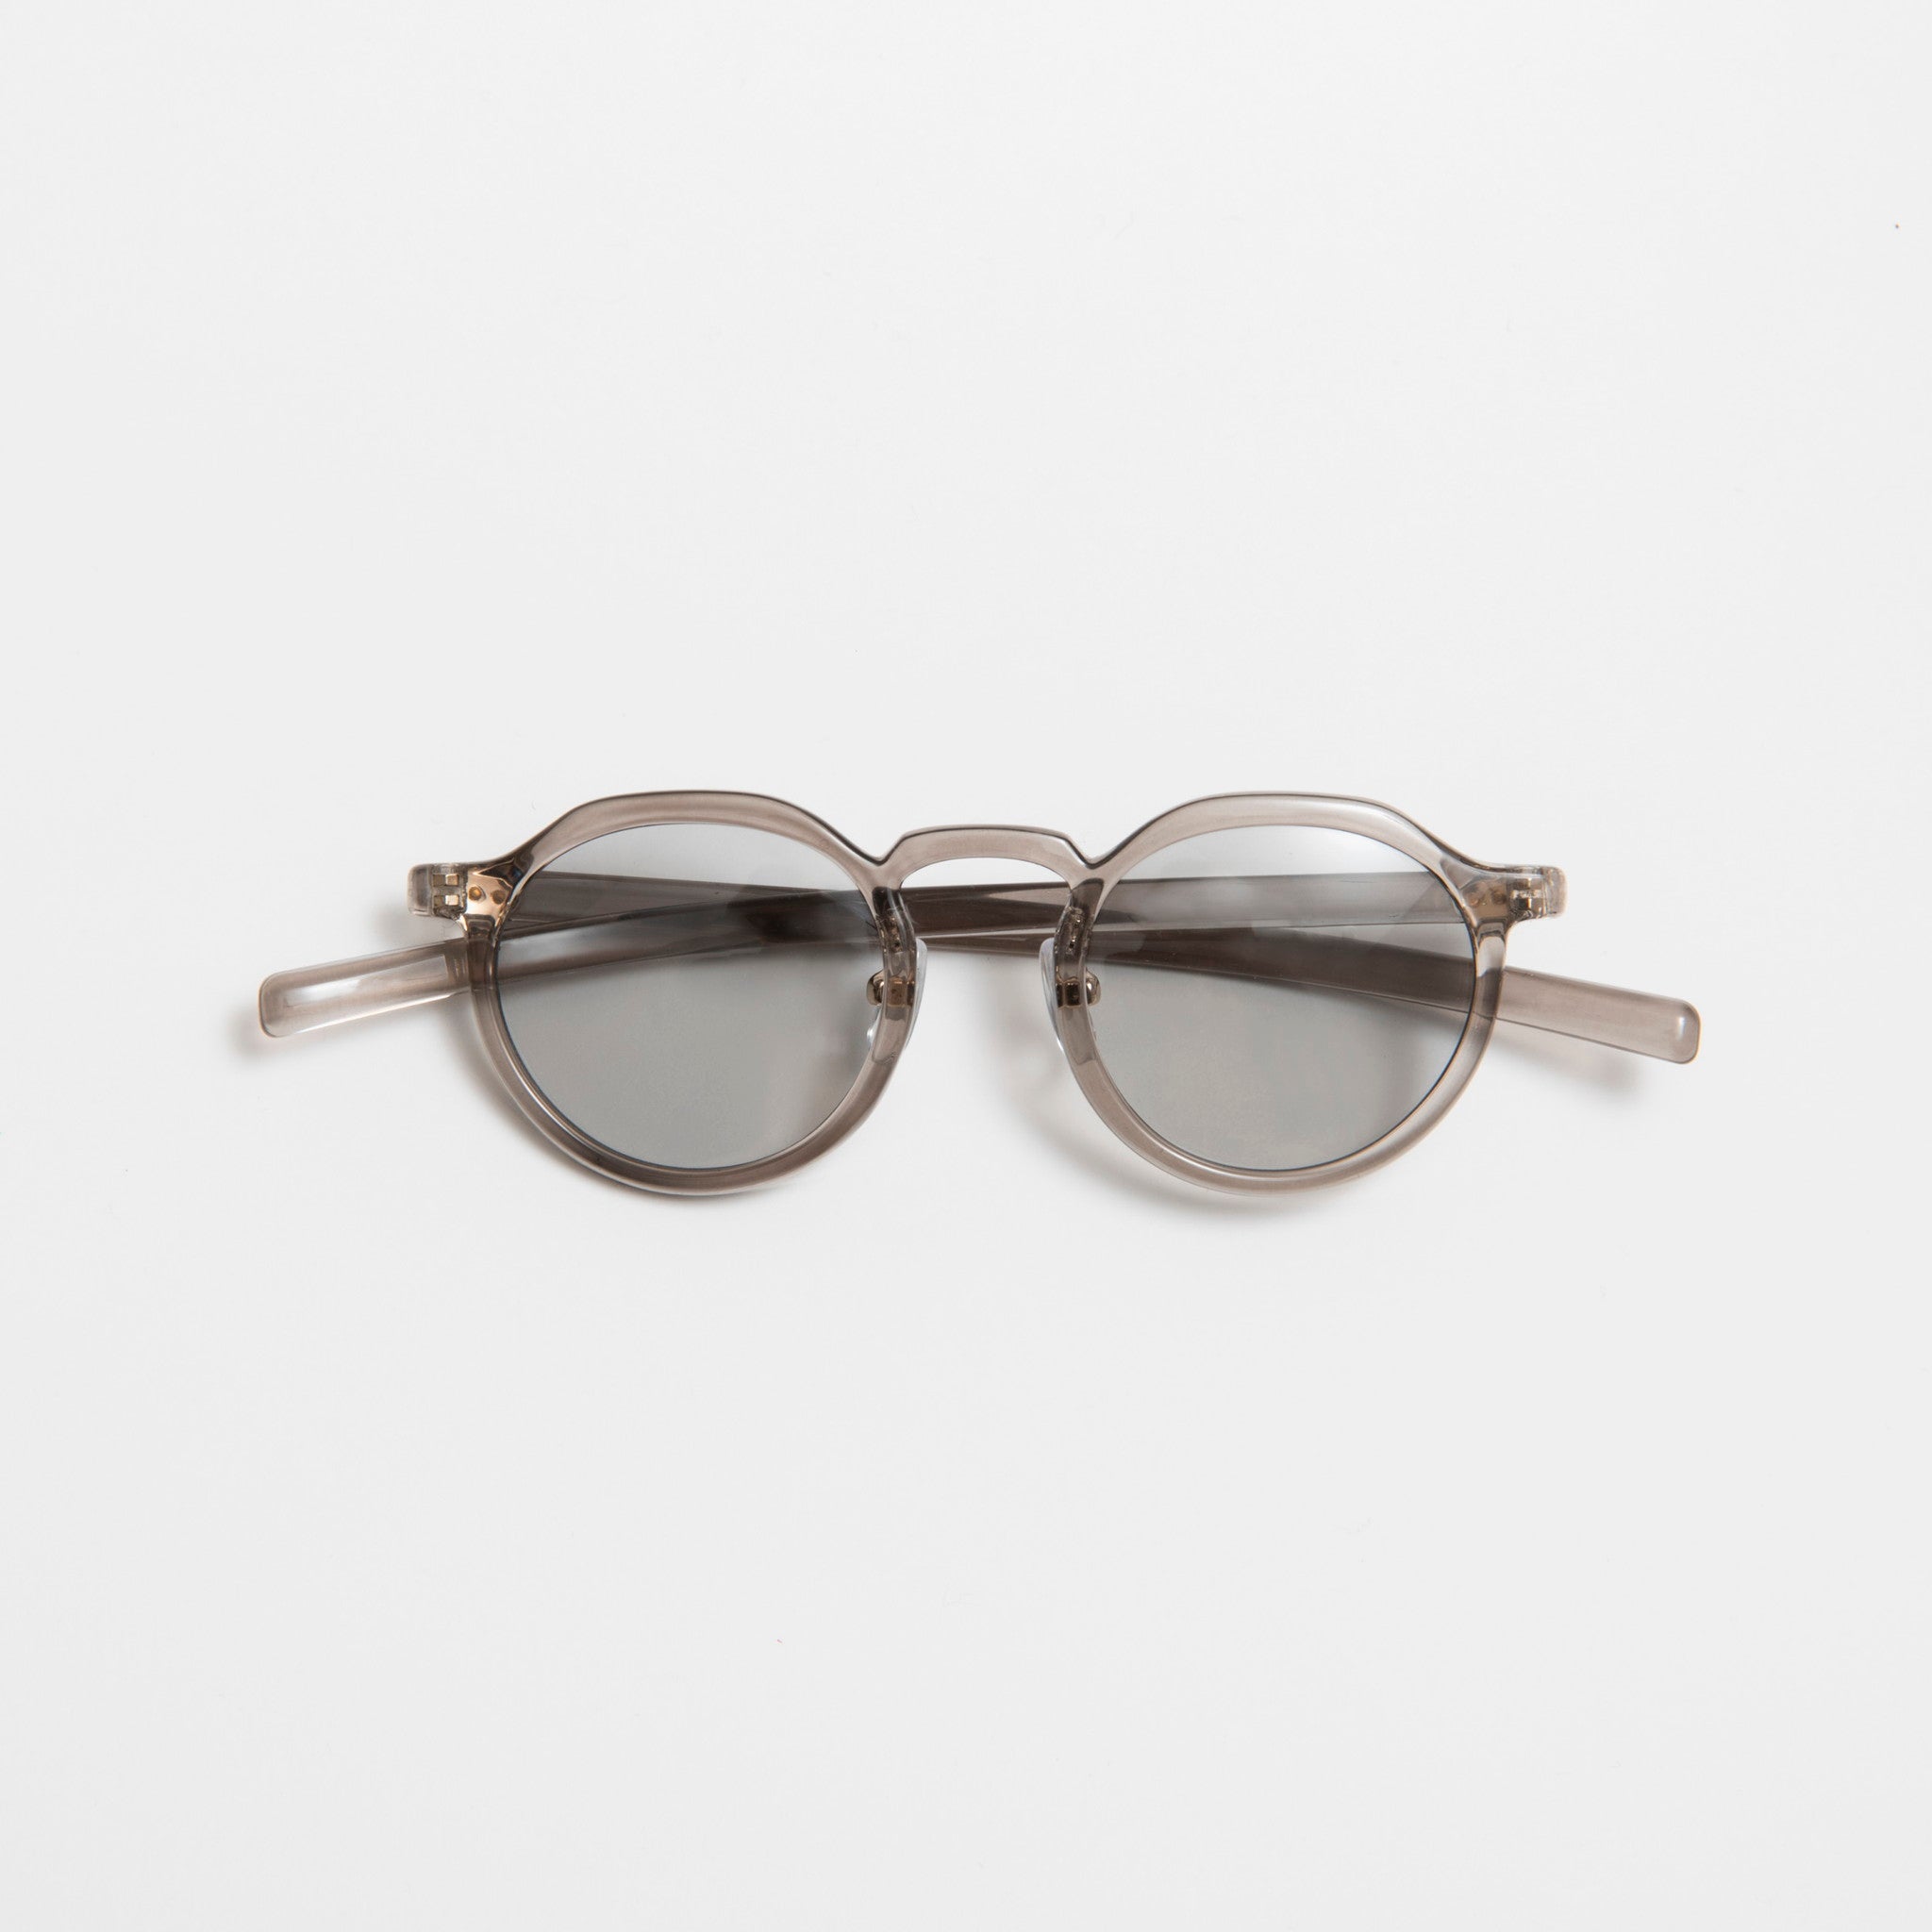 【Ciqi】DAMON サングラス Gray Light Gray Lenses sunglasses(デイモン グレー ライトグレーレンズ)